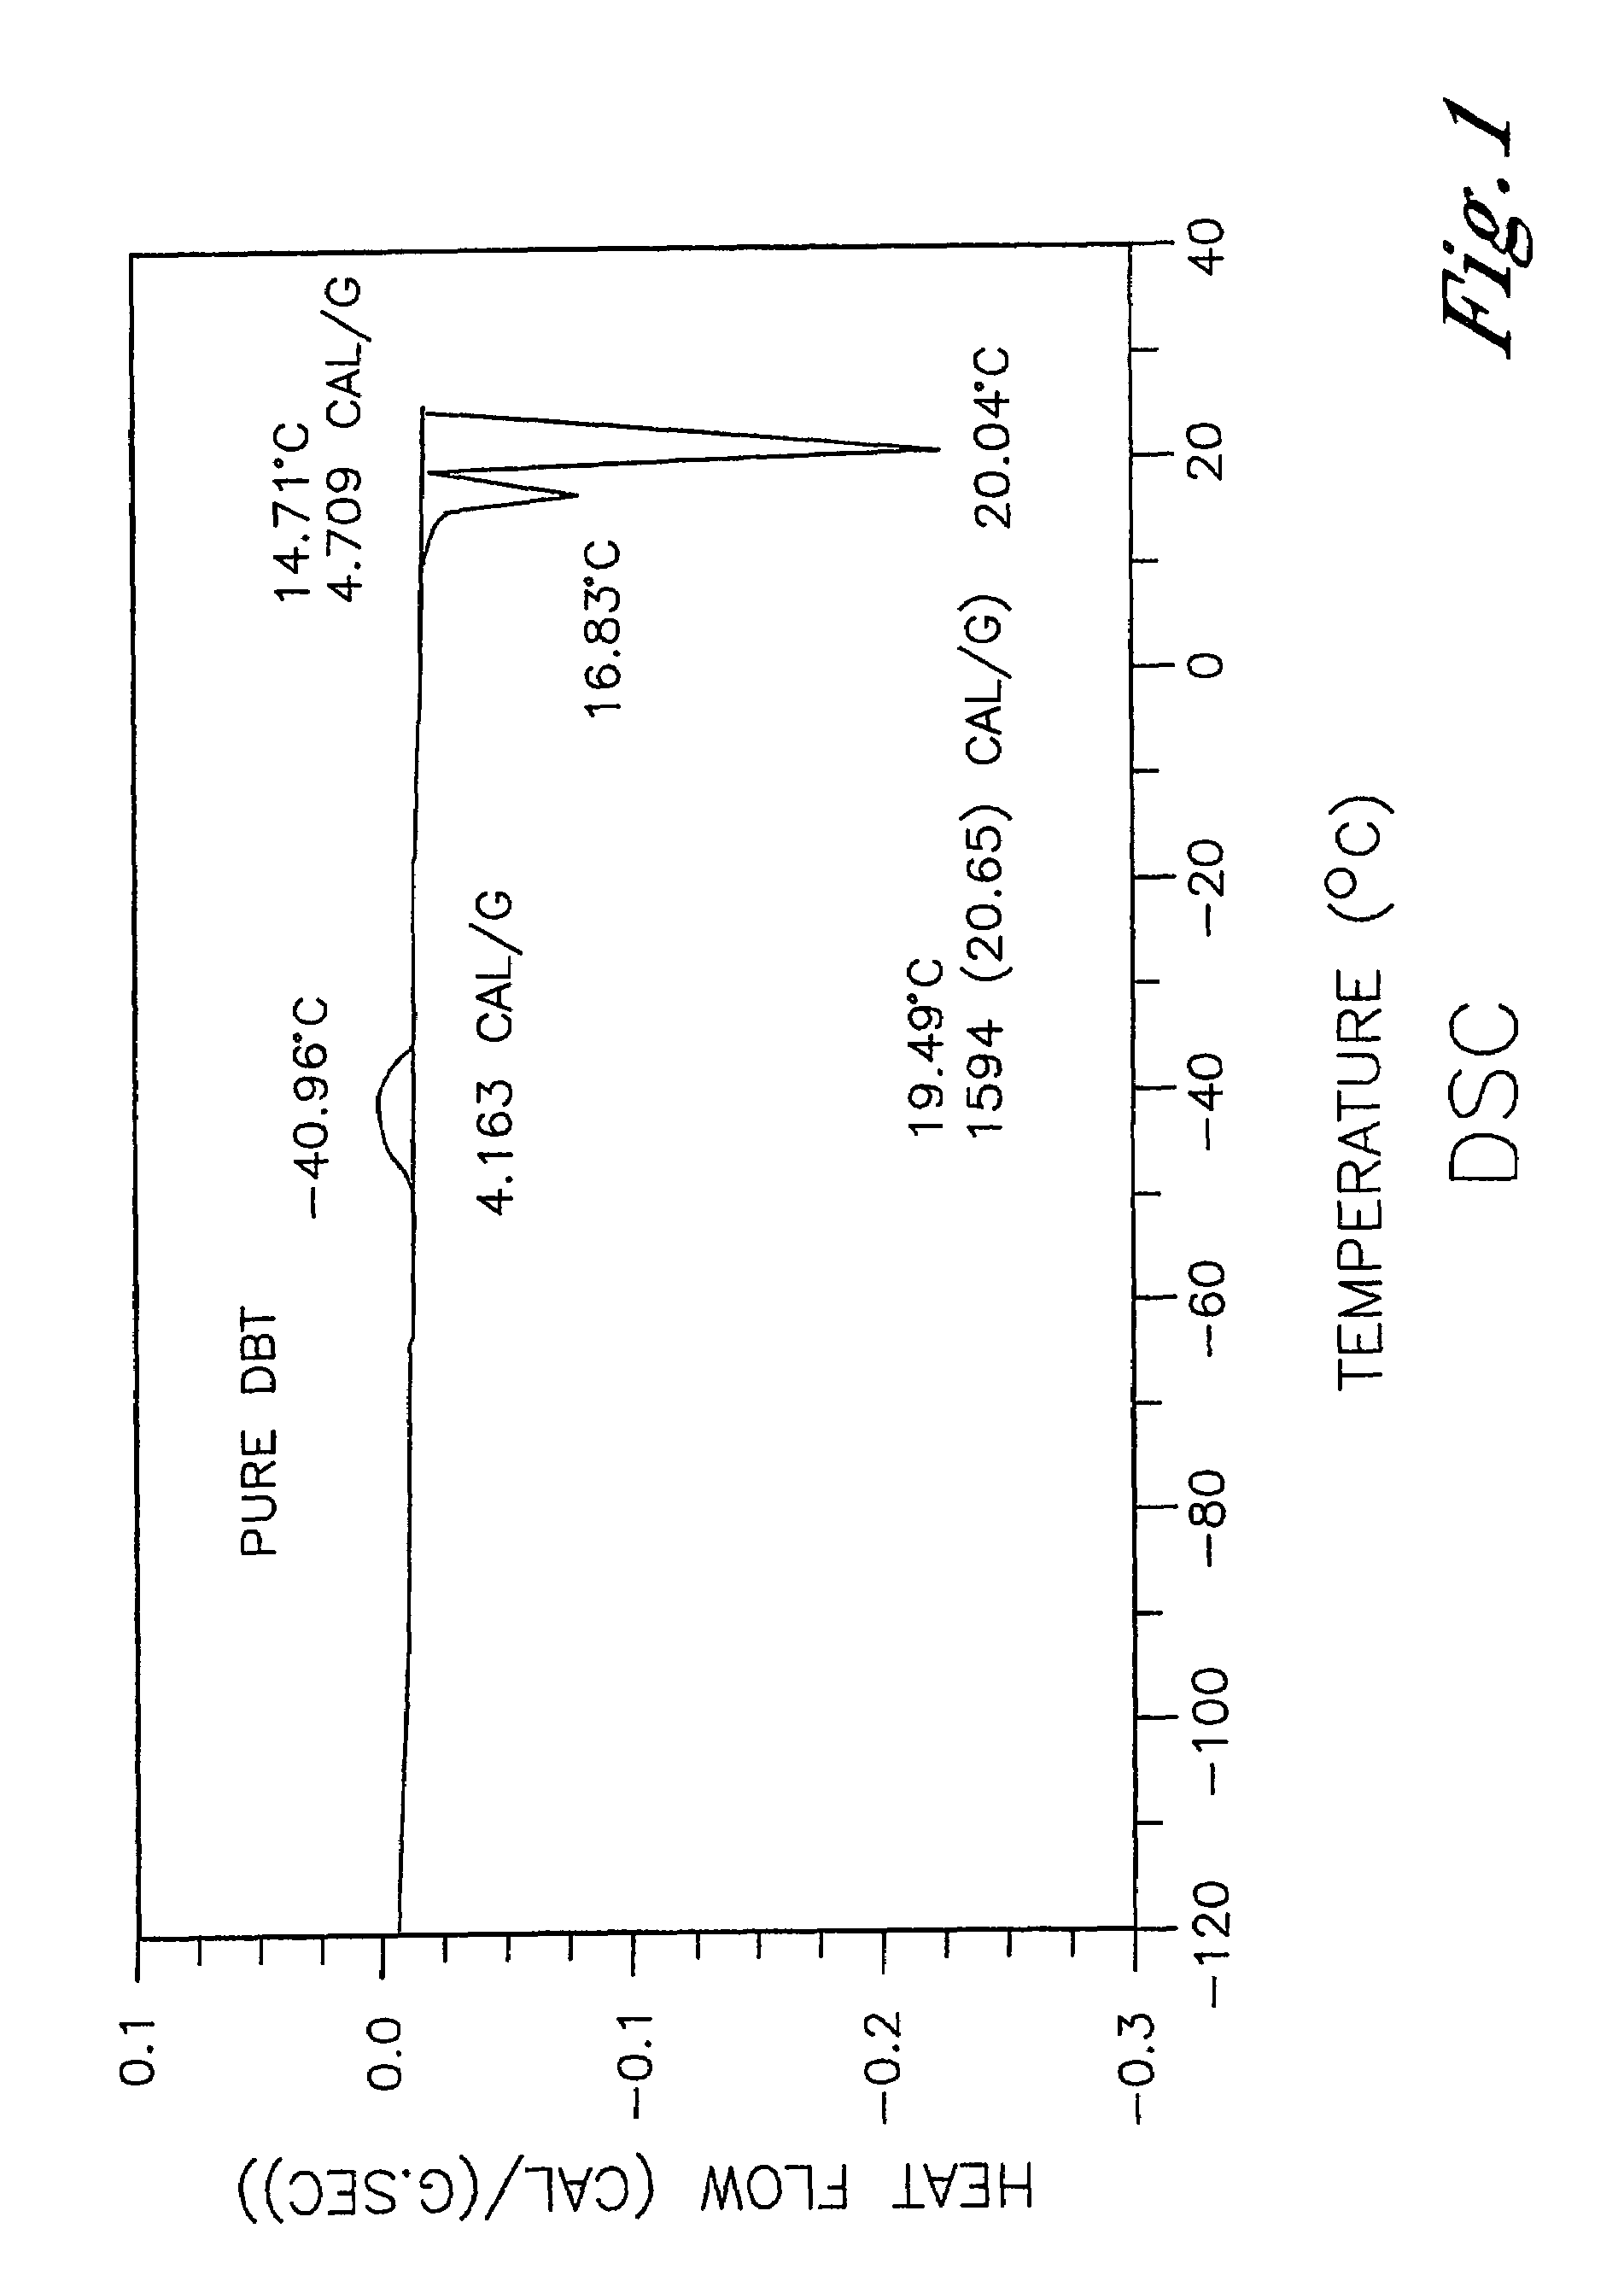 Low-melting mixtures of di-n-butyl and diisobutyl terephthalate